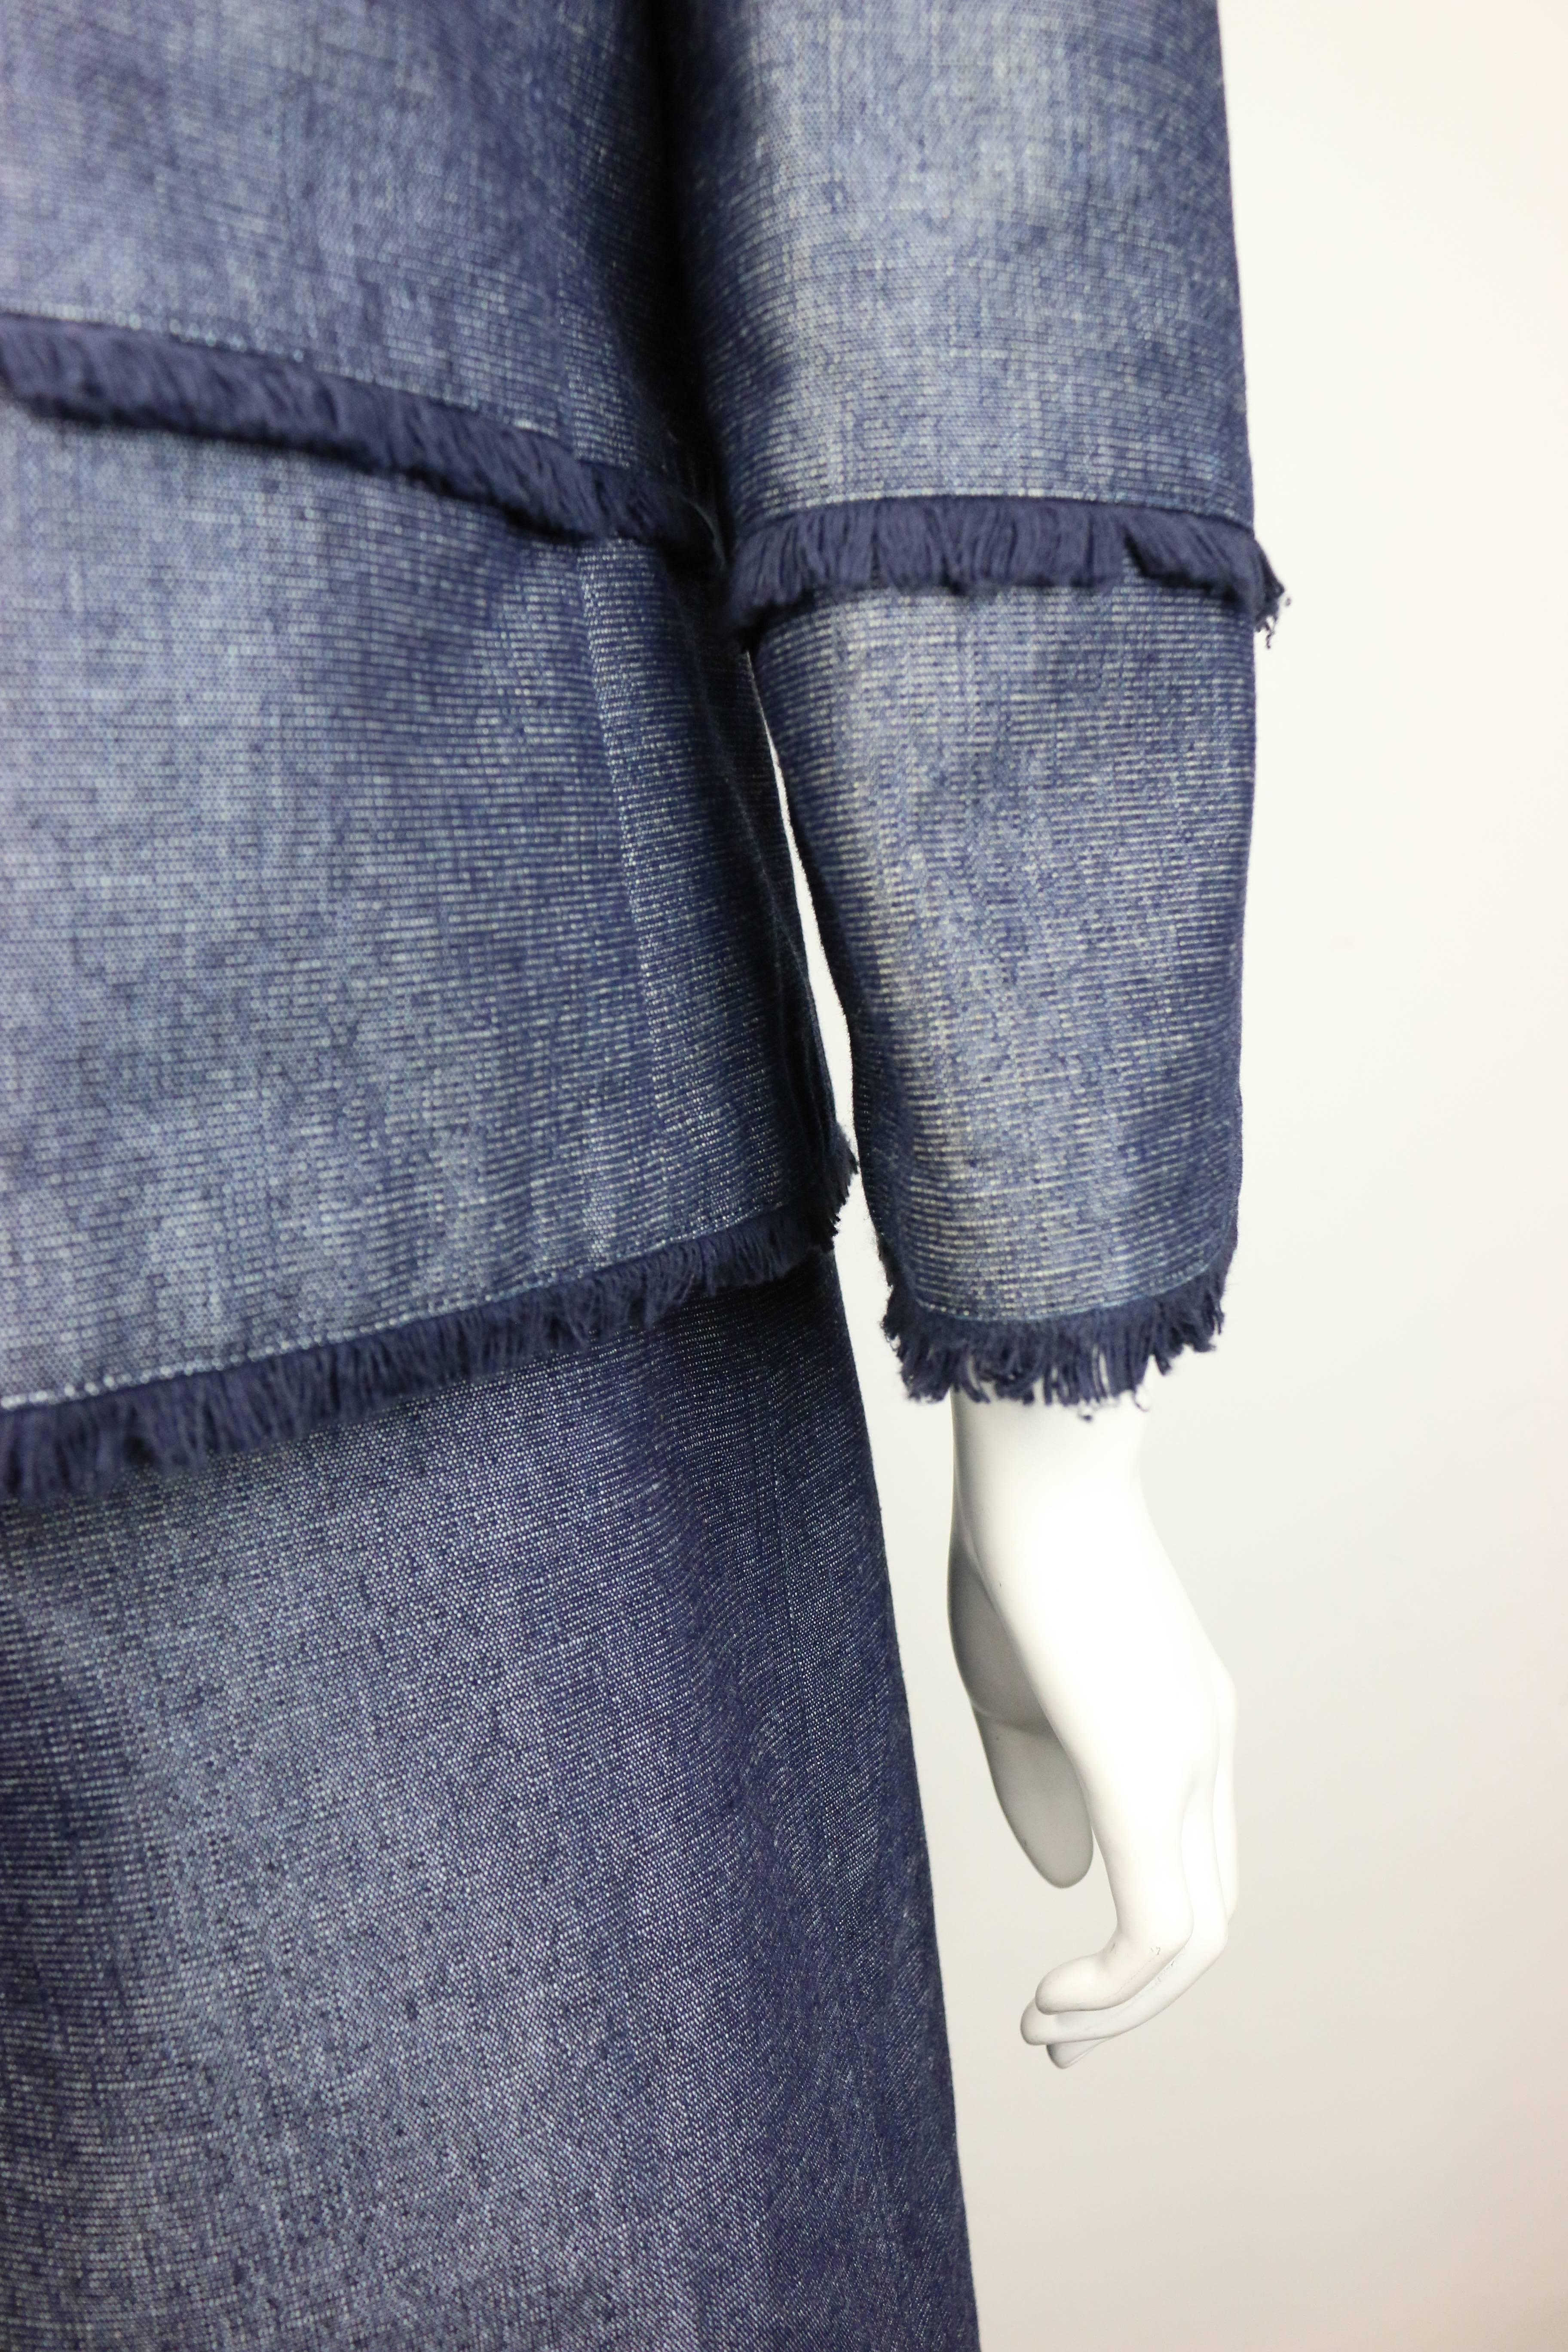 Women's Chanel Blue Denim with Raw Edge Fringe Jacket and Skirt Ensemble  For Sale